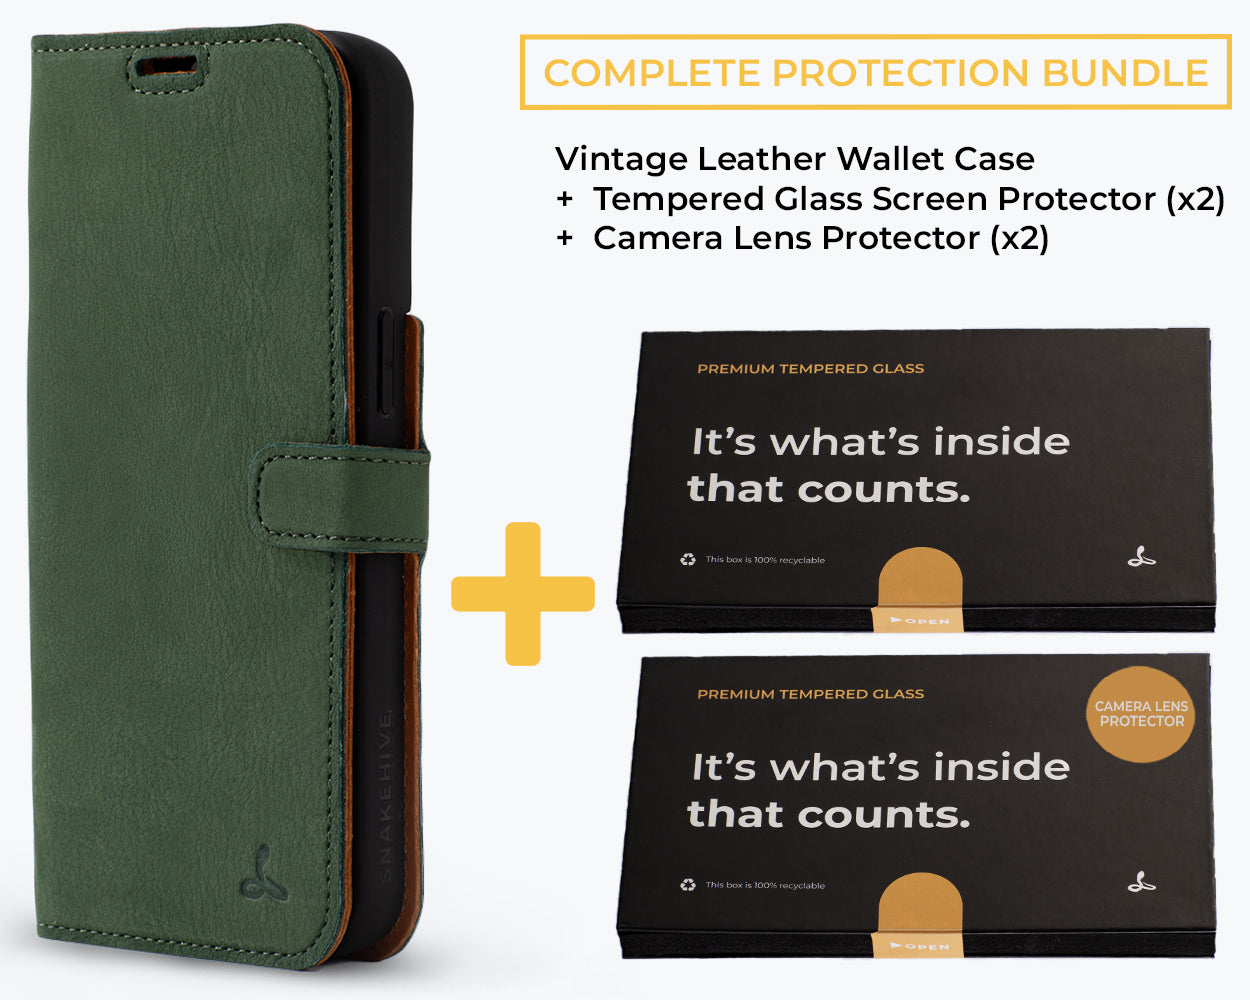 Complete Protection Bundle (Vintage Wallet) - Samsung Galaxy S22 Ultra